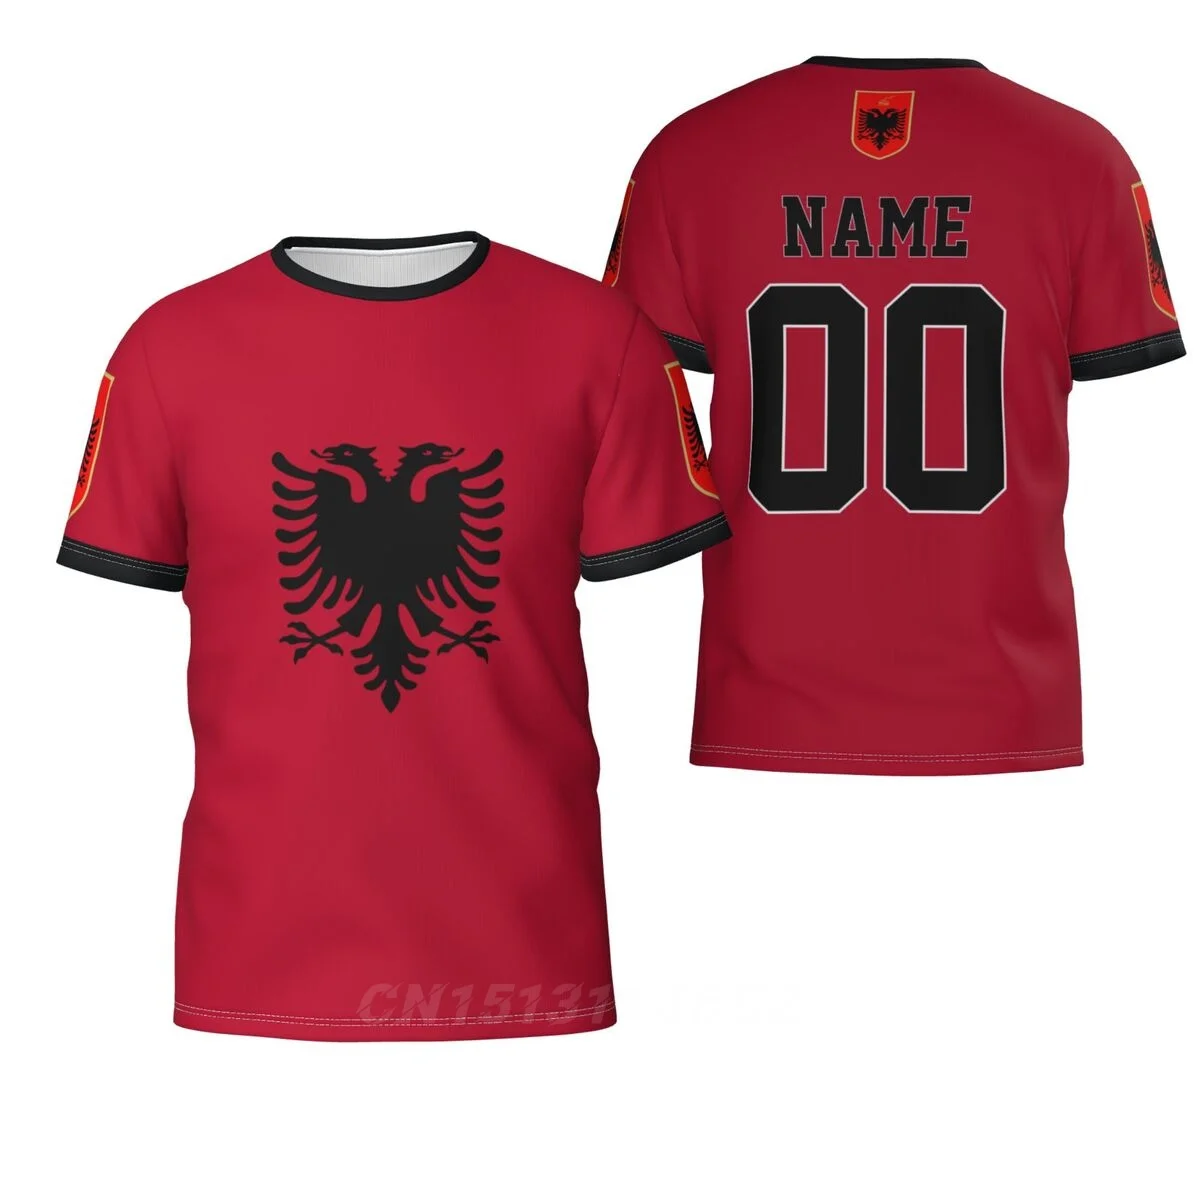 

Футболка унисекс с эмблемой флага Албании и номером на заказ